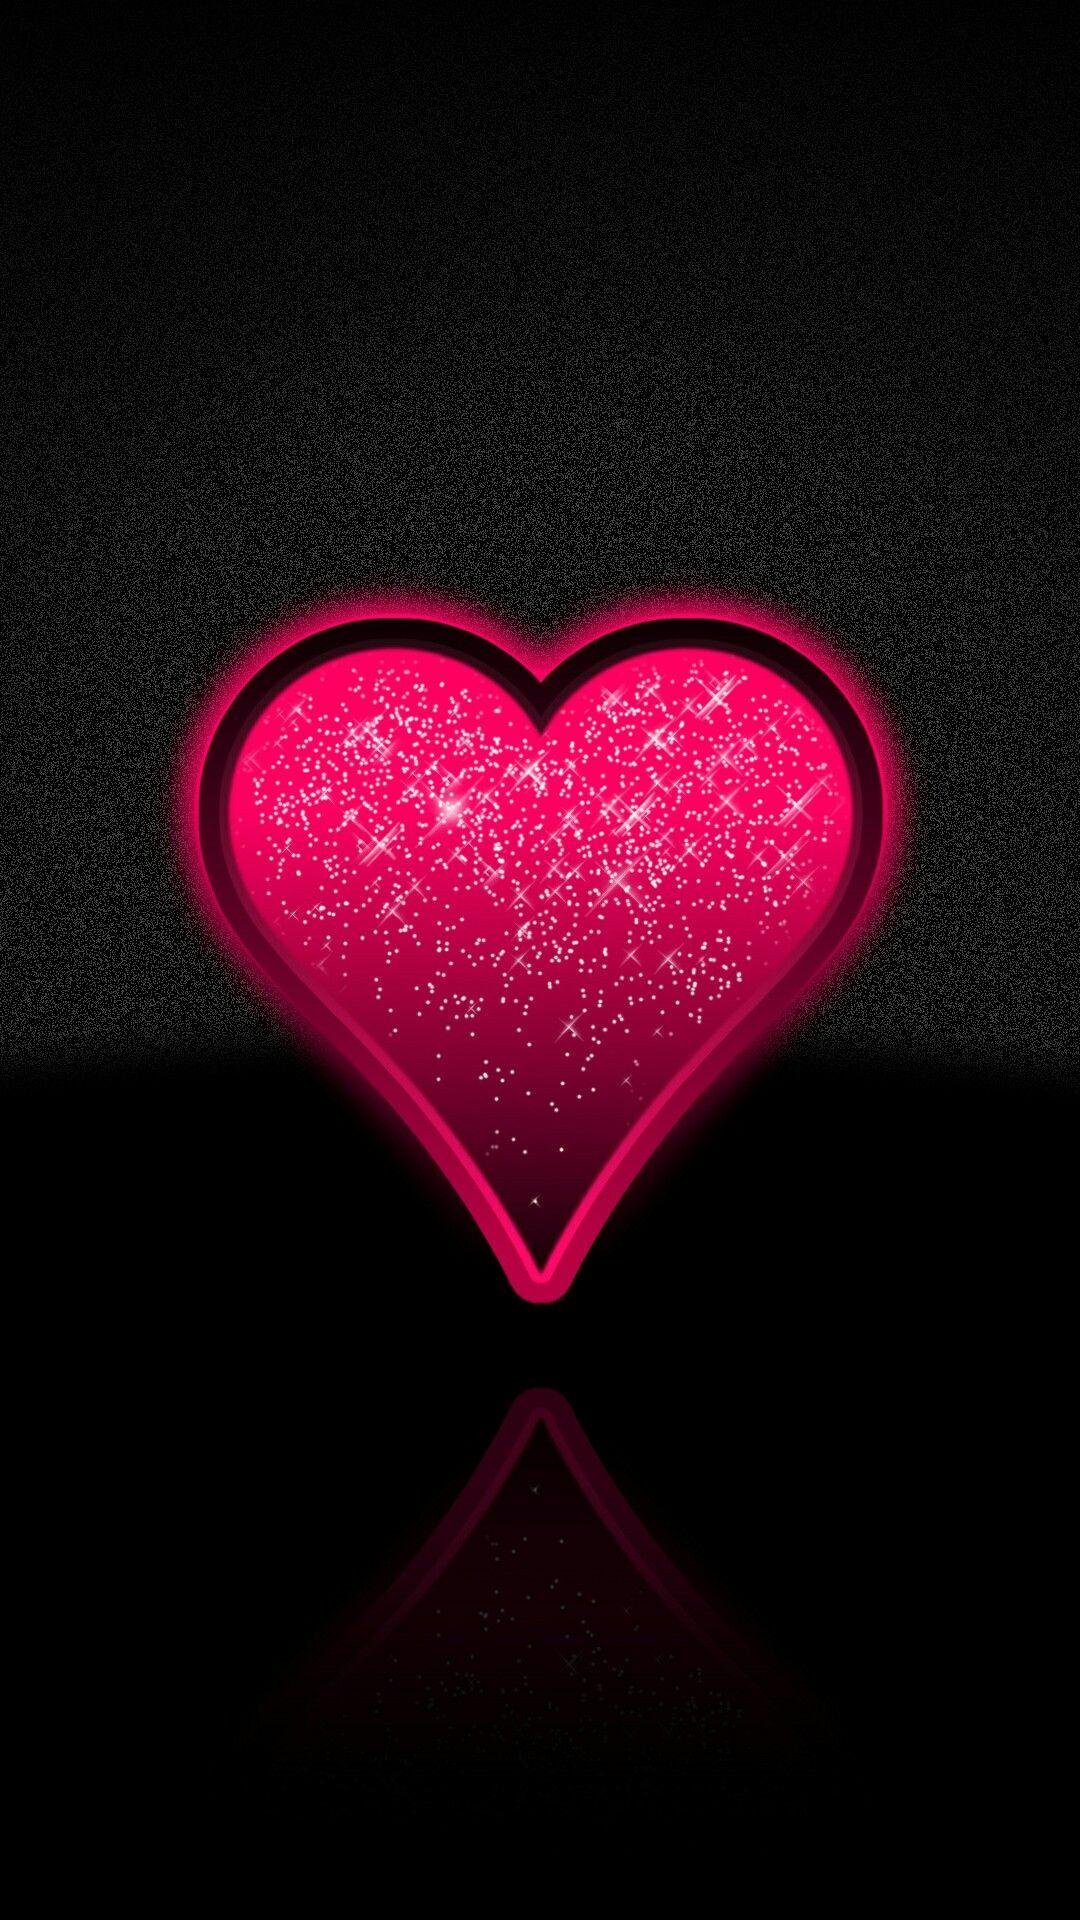 70787 Pink Hearts Glitter Images Stock Photos  Vectors  Shutterstock